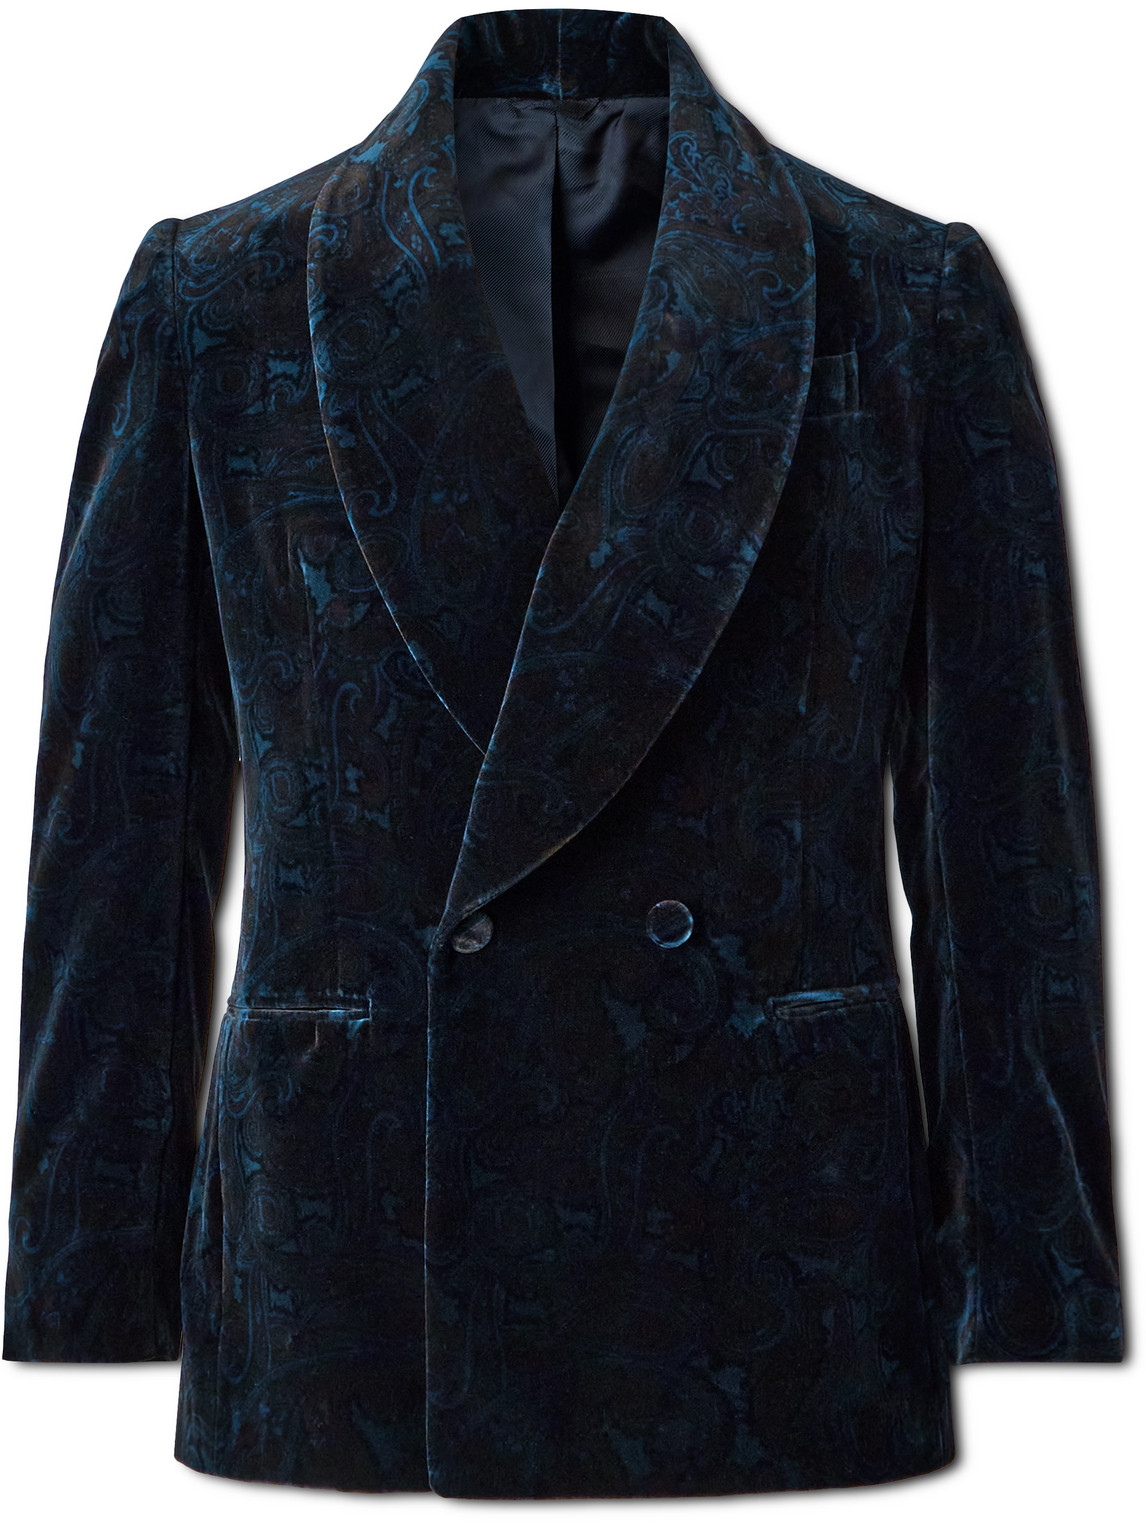 Positano Shawl Collar Double-Breasted Paisley Cotton-Velvet Tuxedo Jacket